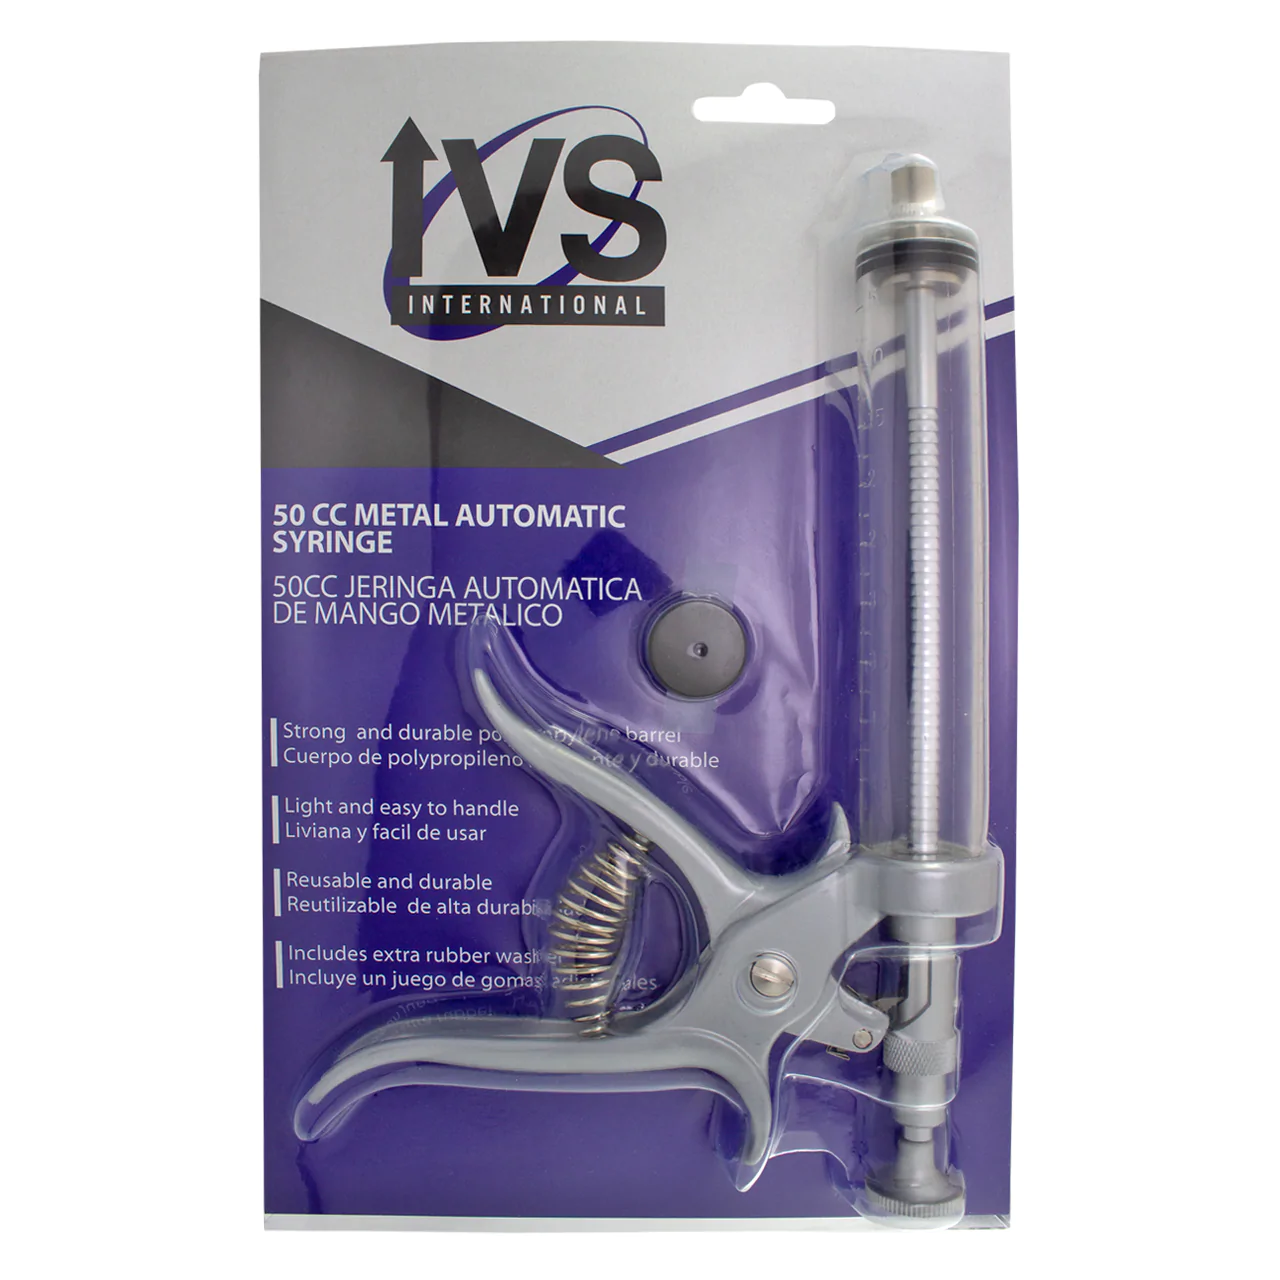 IVS Automatic Metallic Syringe 50cc